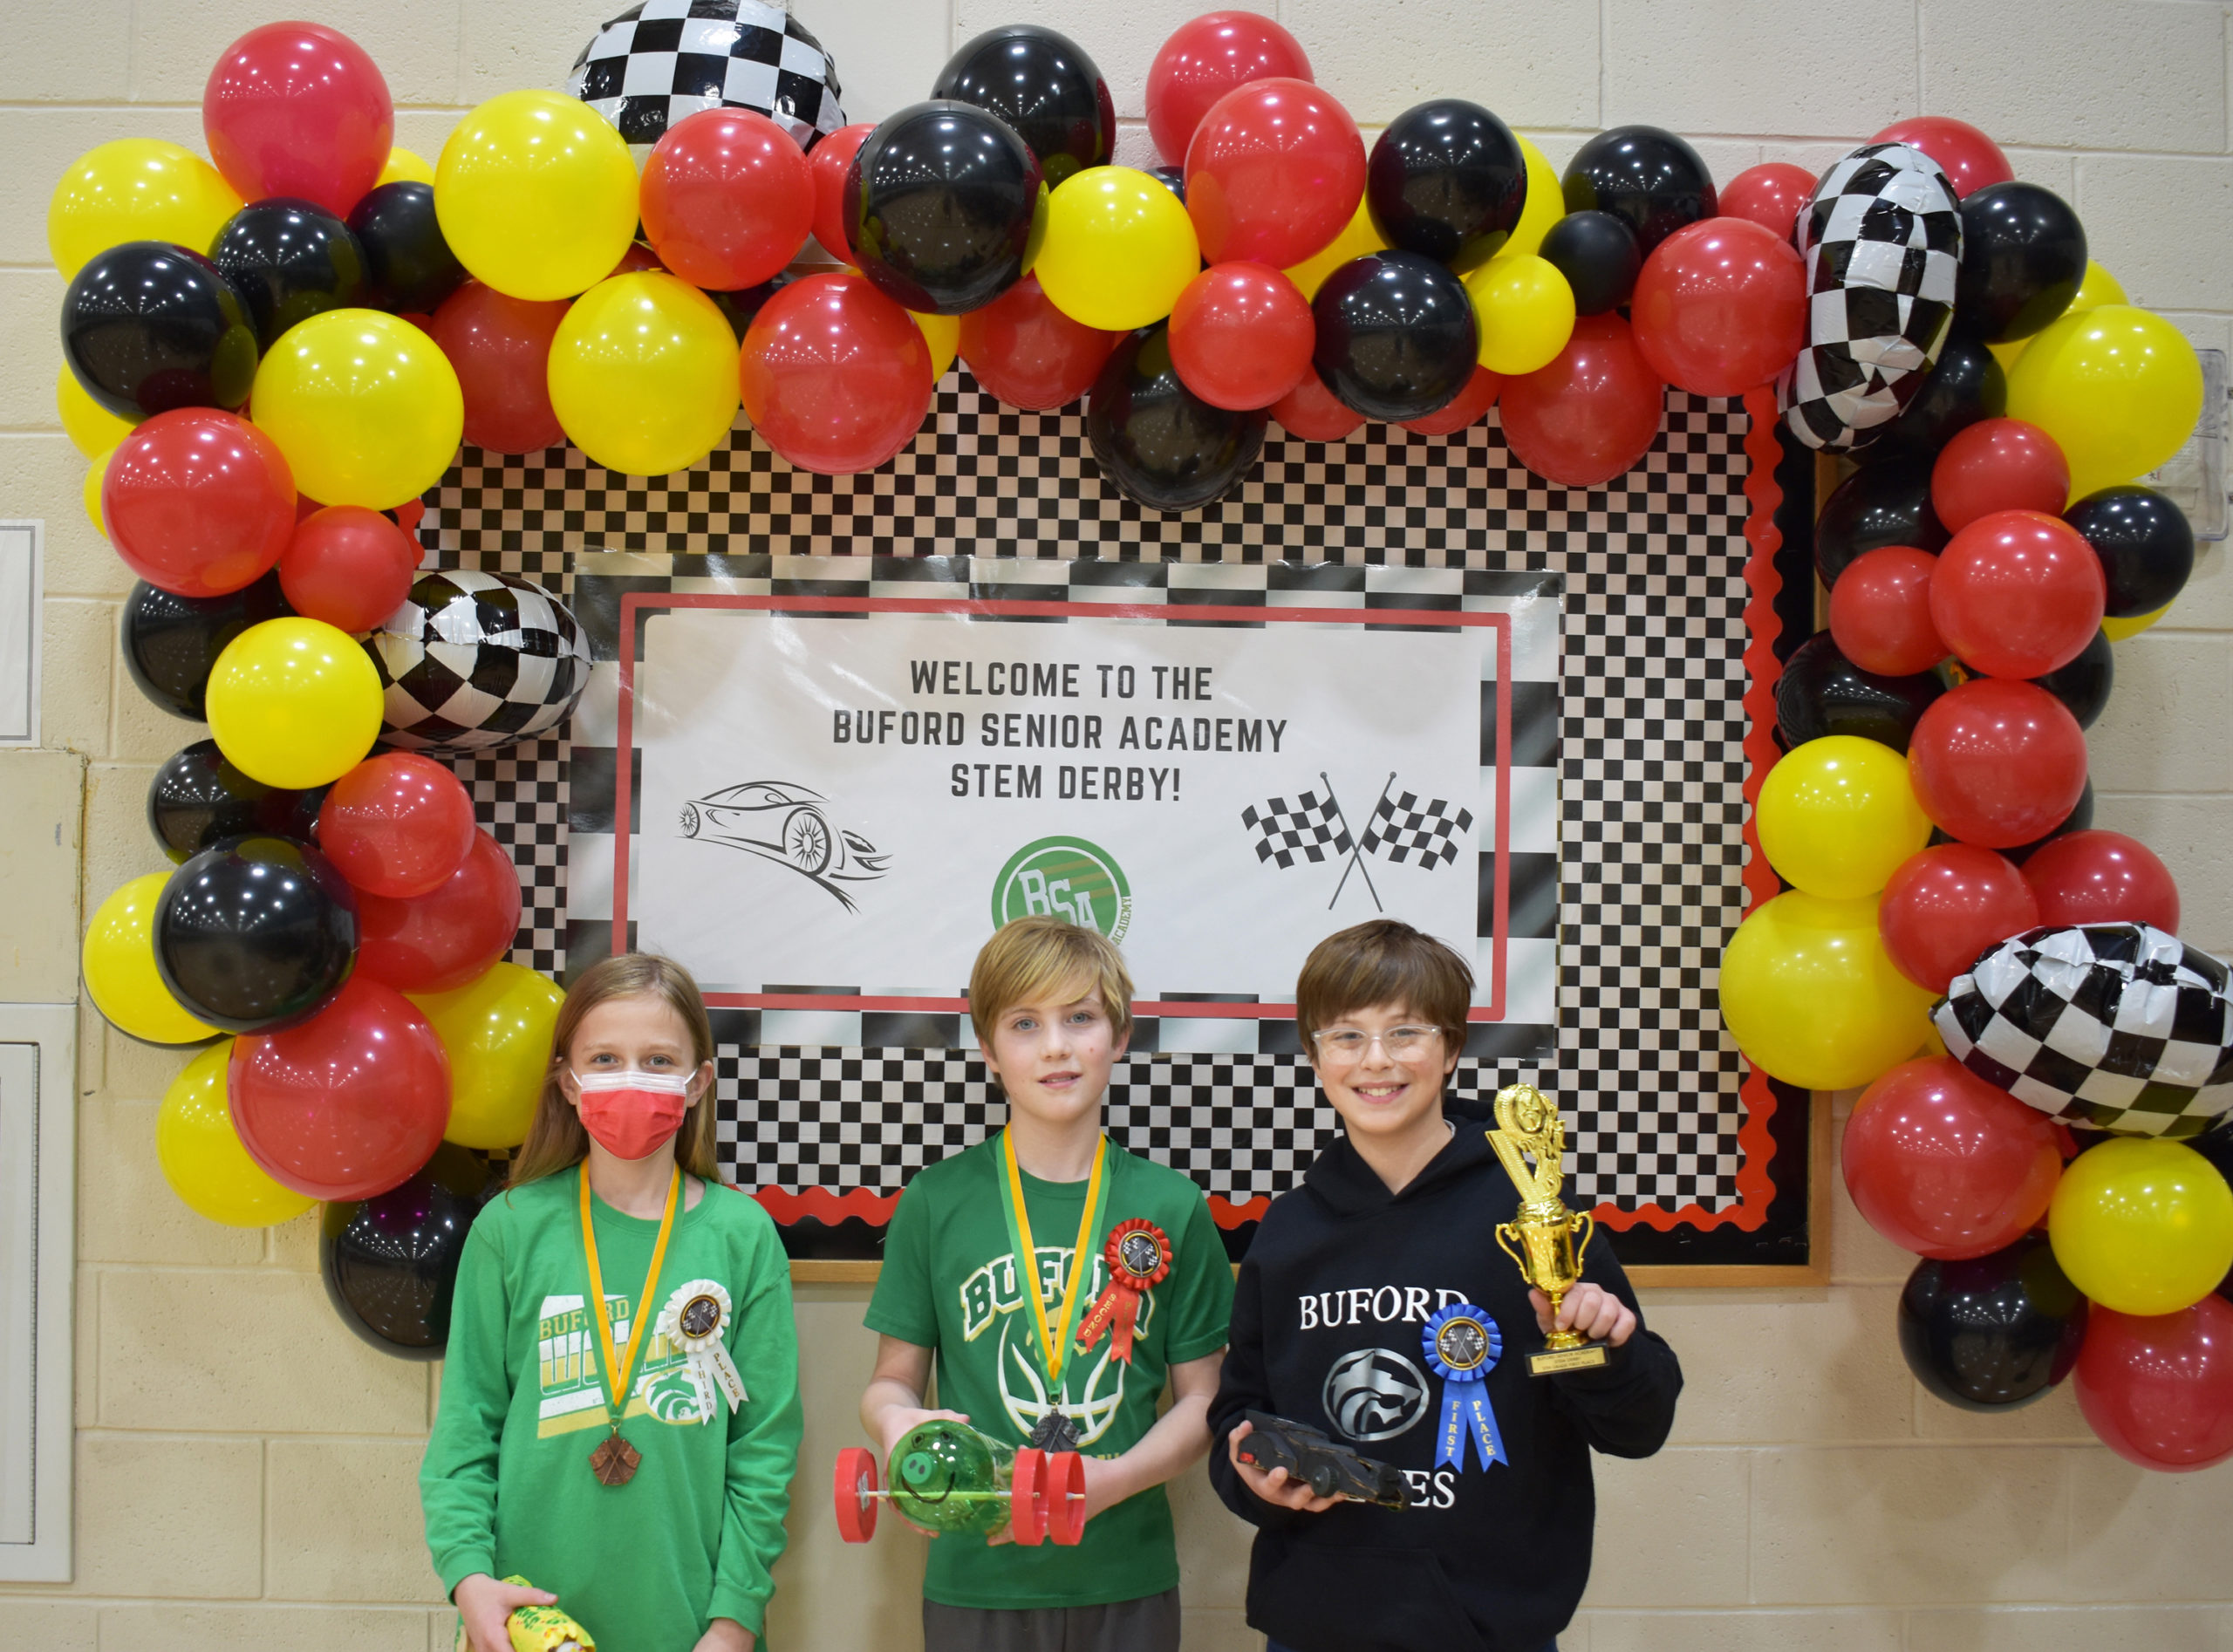 5th grade STEM Derby winners, L-R Pella, Gethers, Owens